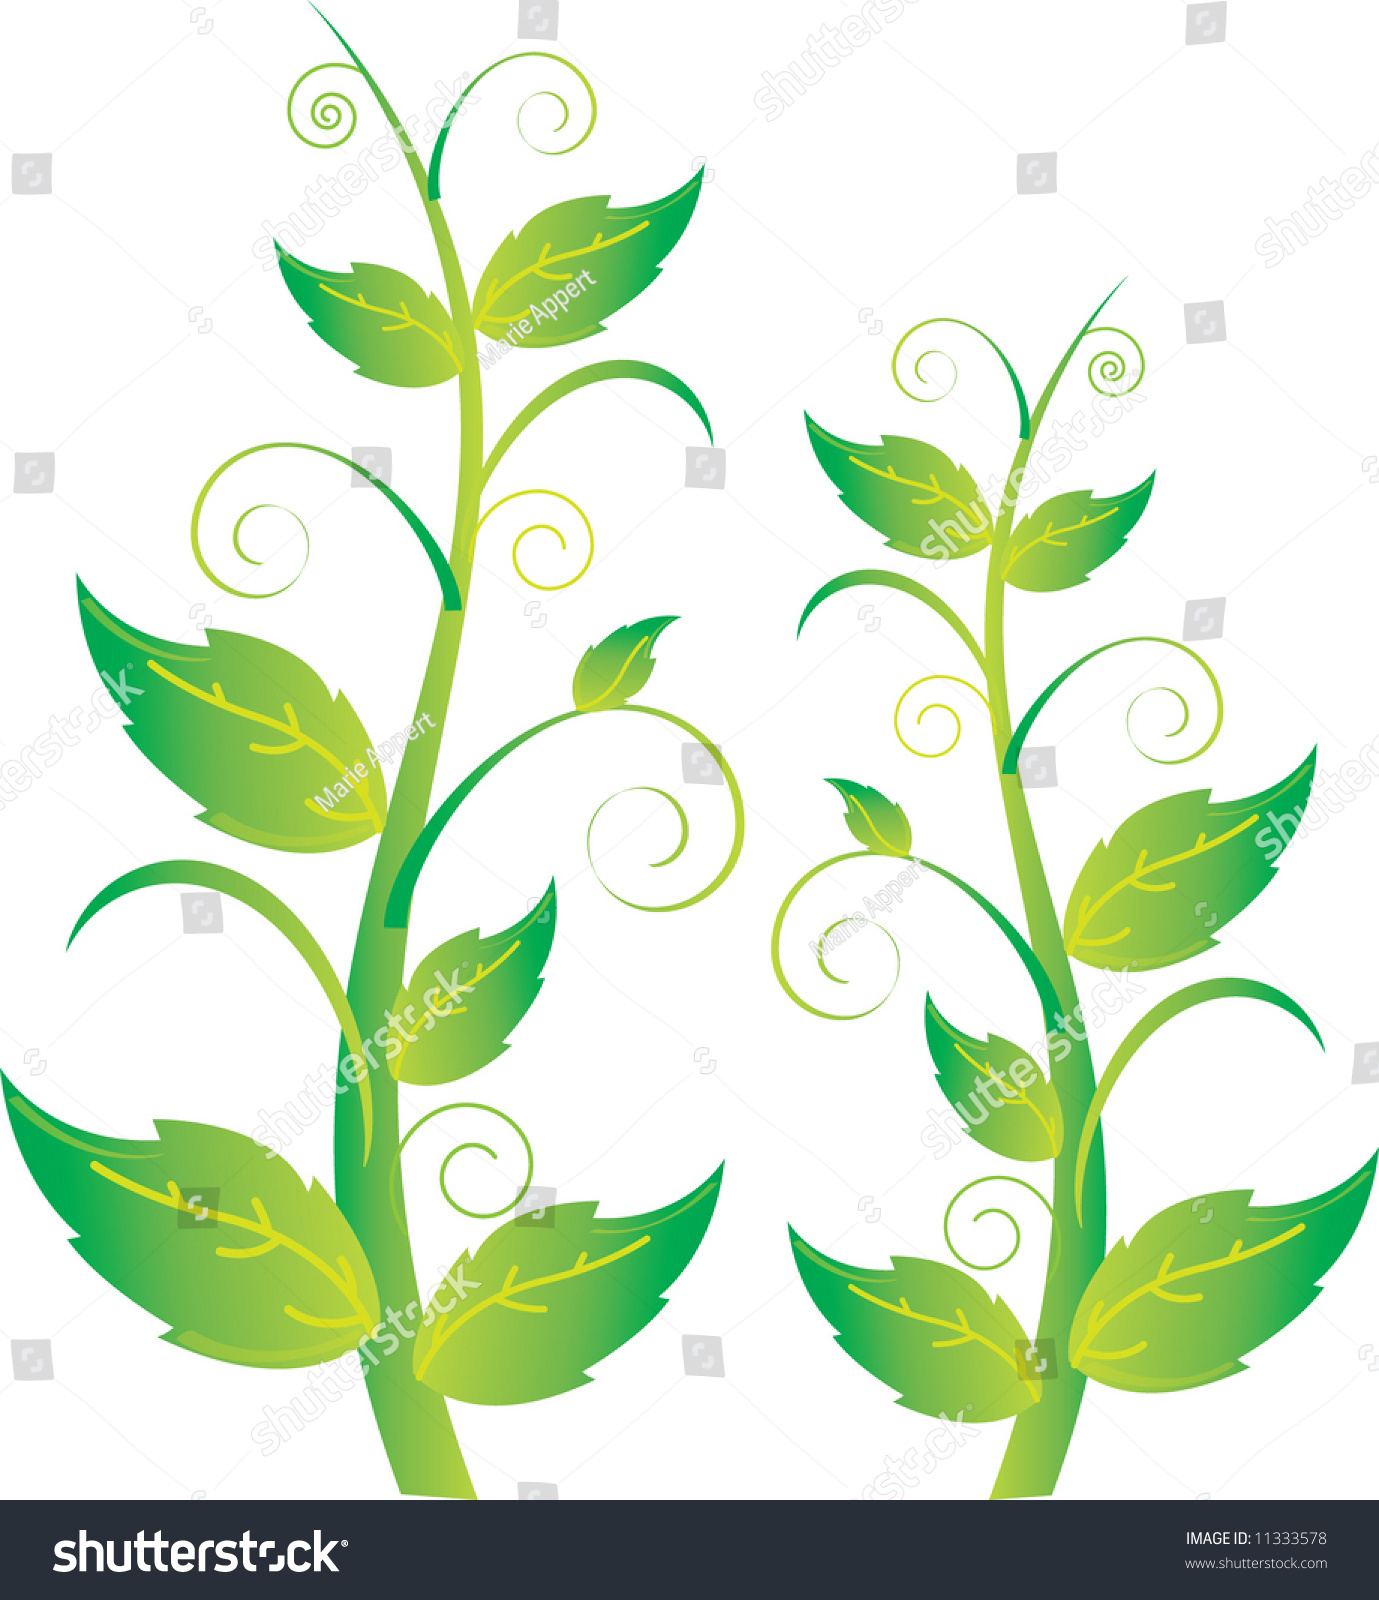 Leaves And Vines Stock Vector Illustration 11333578 : Shutterstock